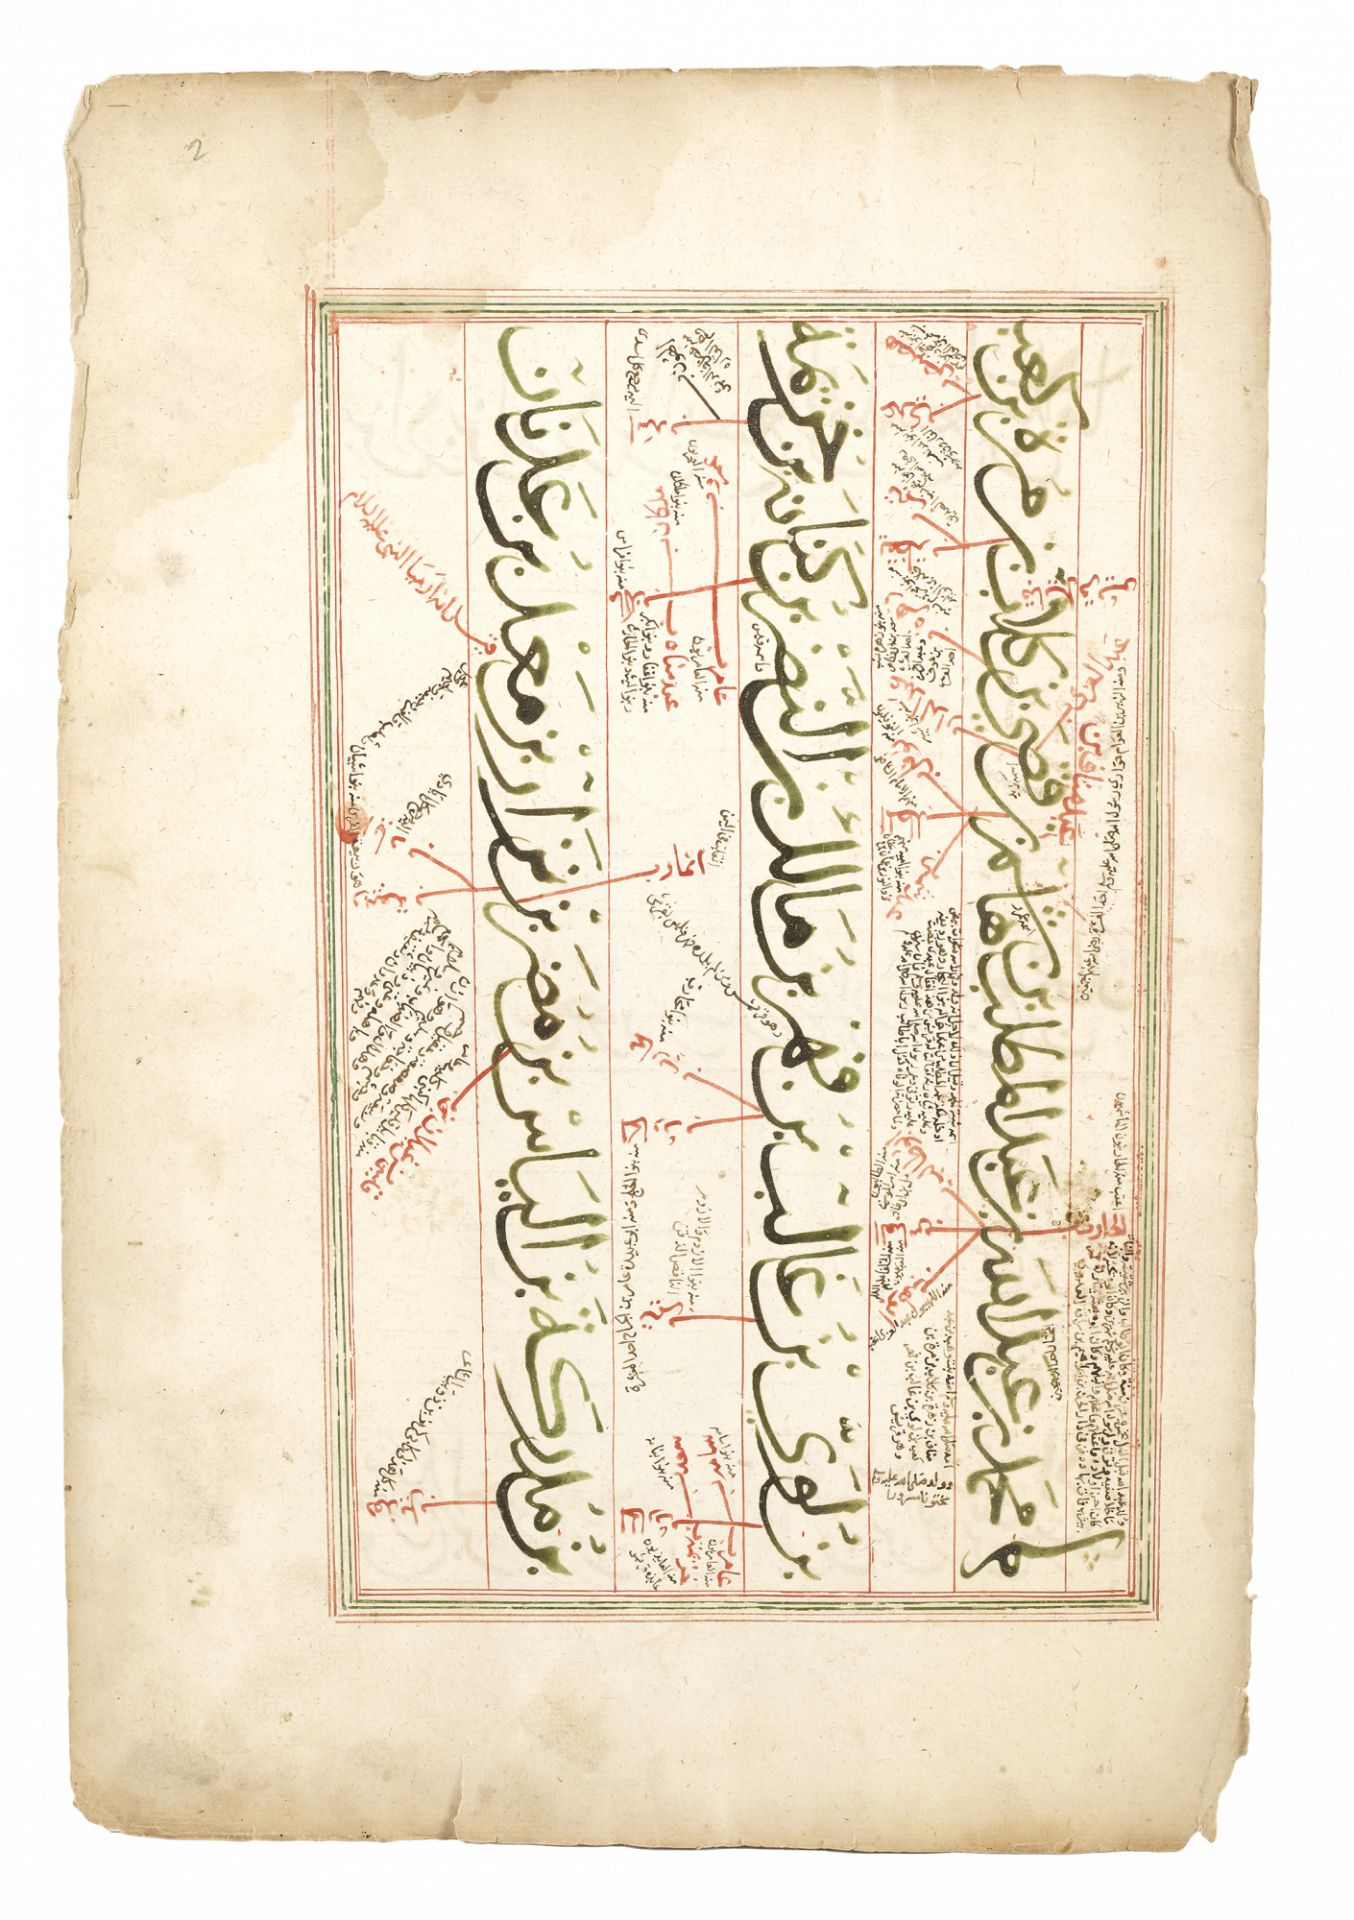 MAJIMA' AL-ANSSAB, A GENEALOGY OF THE PROPHET, 'MUHAMMAD AL-SHAZLY', COMPLETED THE MANUSCRIPT ON THU - Bild 6 aus 10